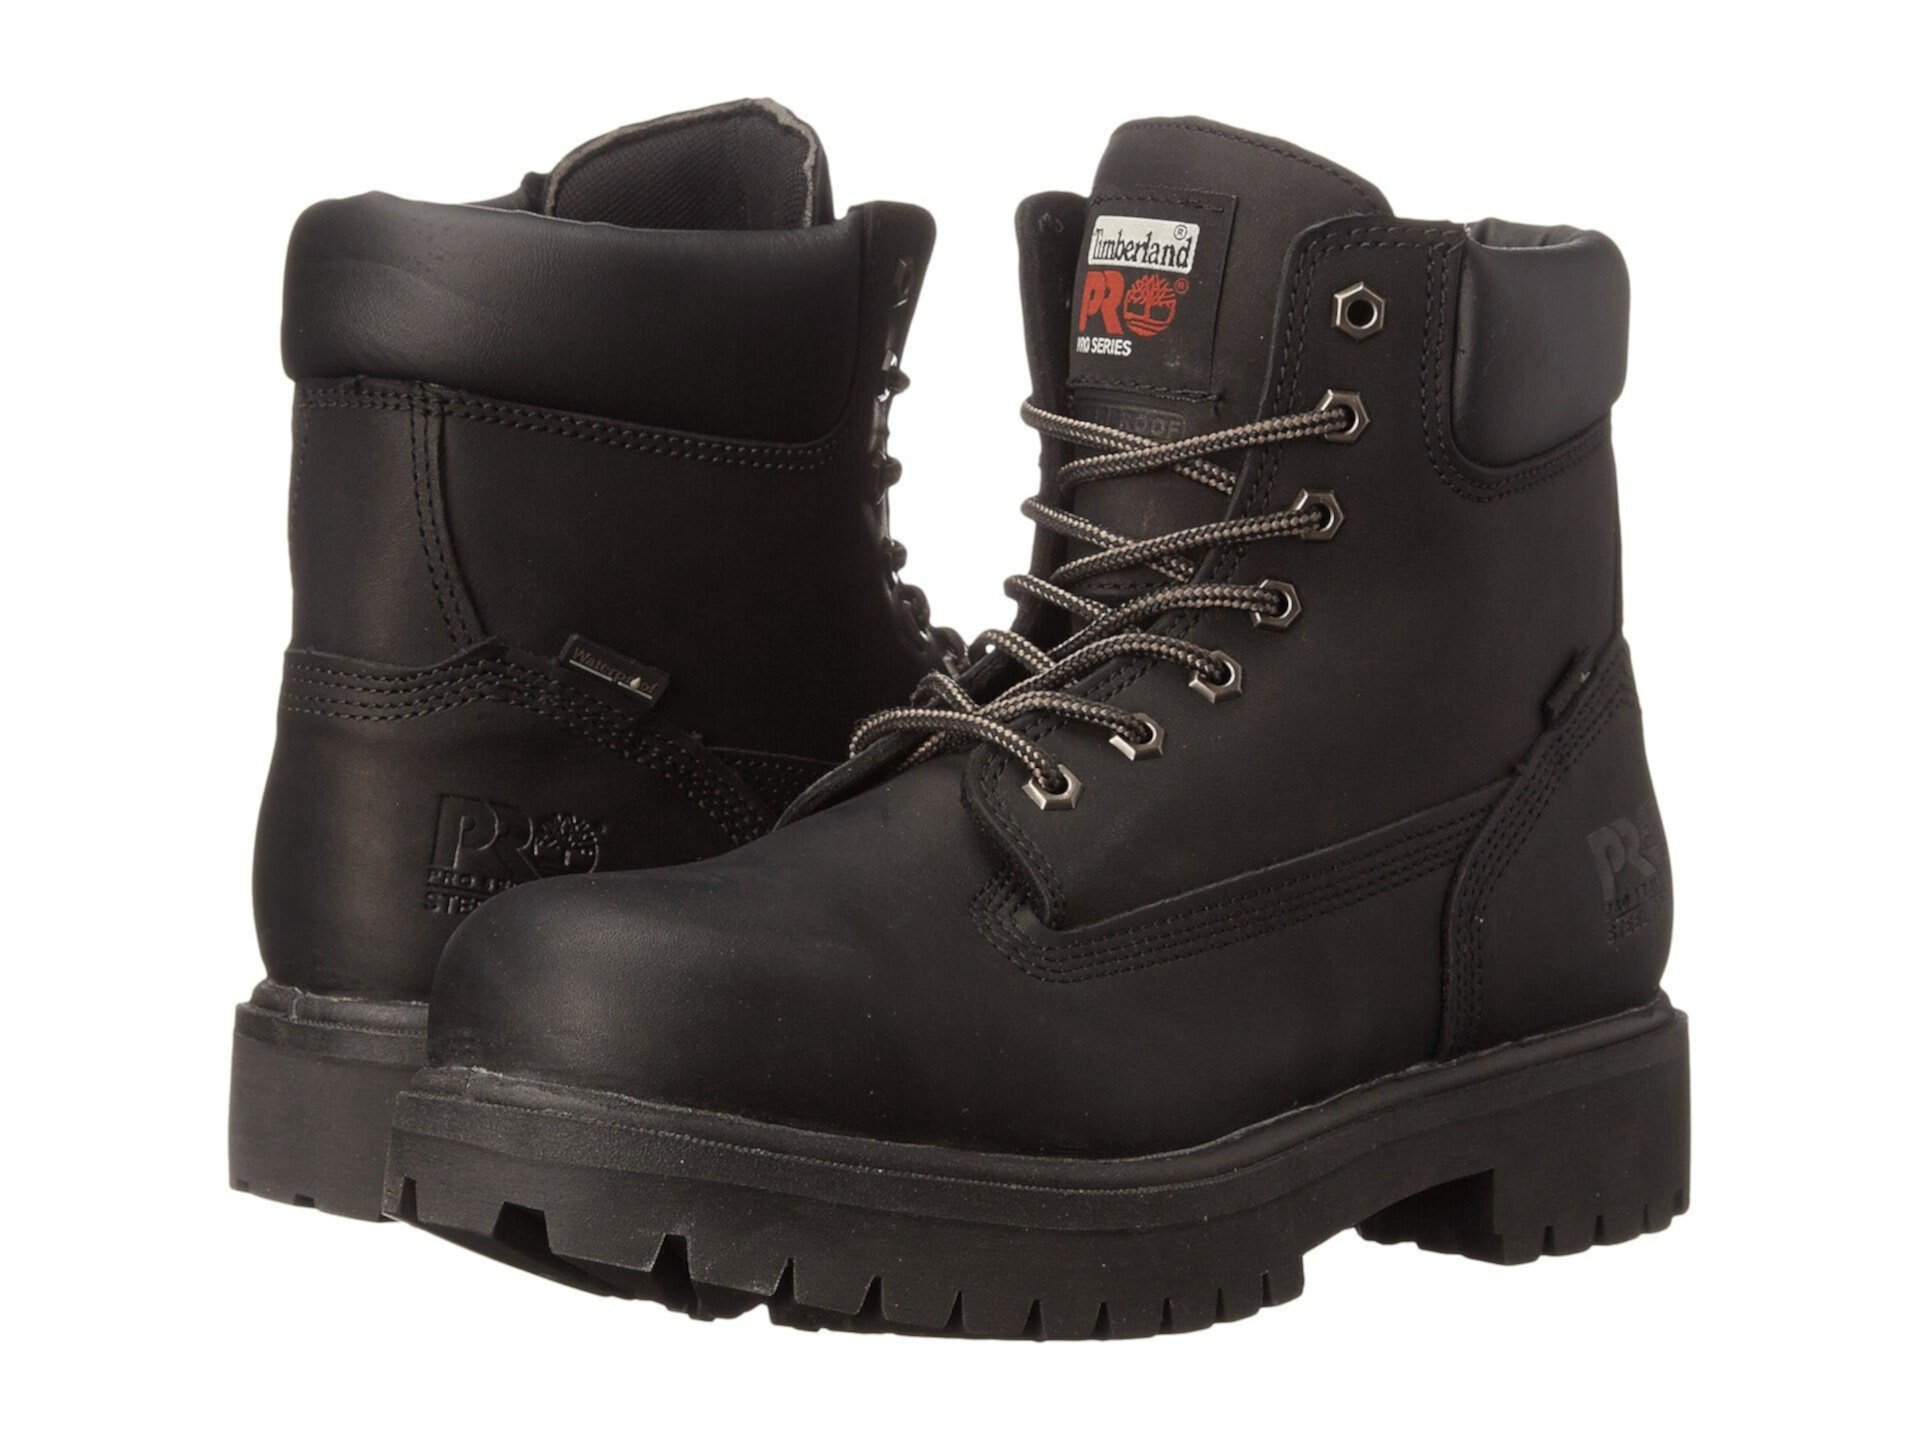 Ботинки мужские 3. Timberland Pro Steel Toe. Timberland Pro Safety Boots. Timberland direct attach. Ботинки Timberland оригинал.